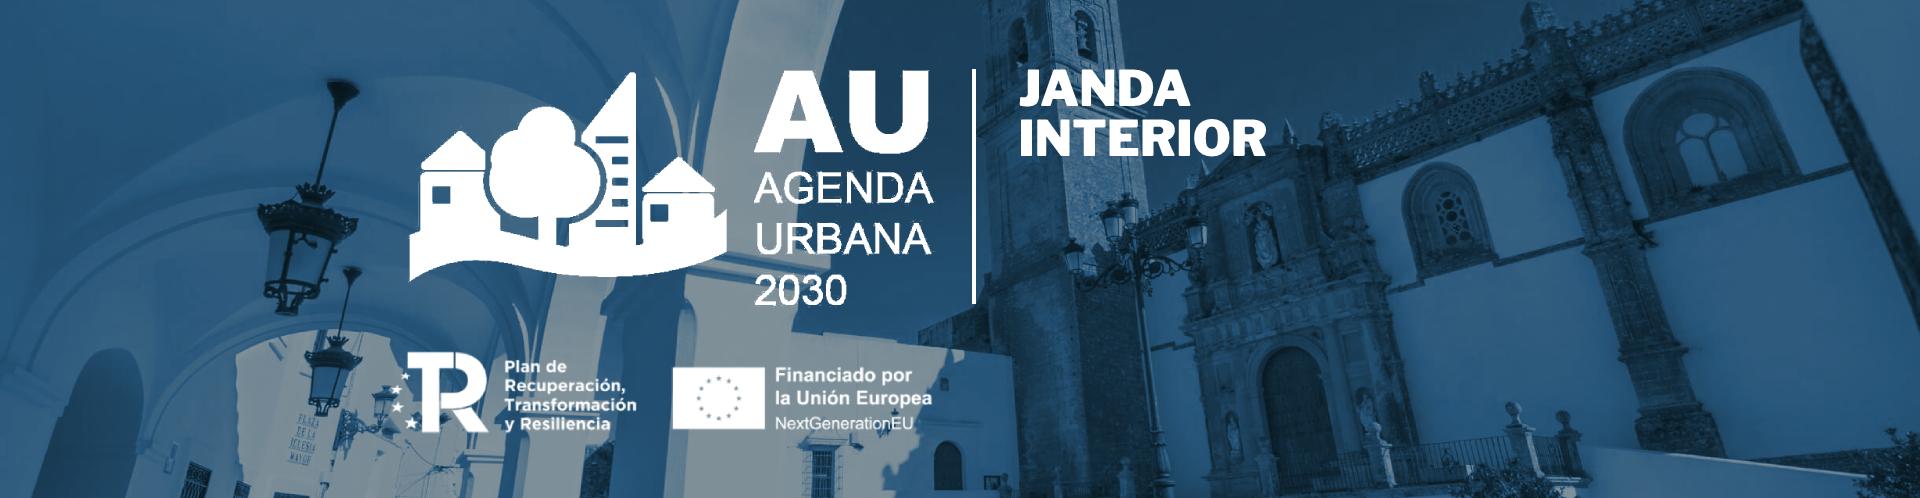 Agenda Urbana 2030 Janda Interior